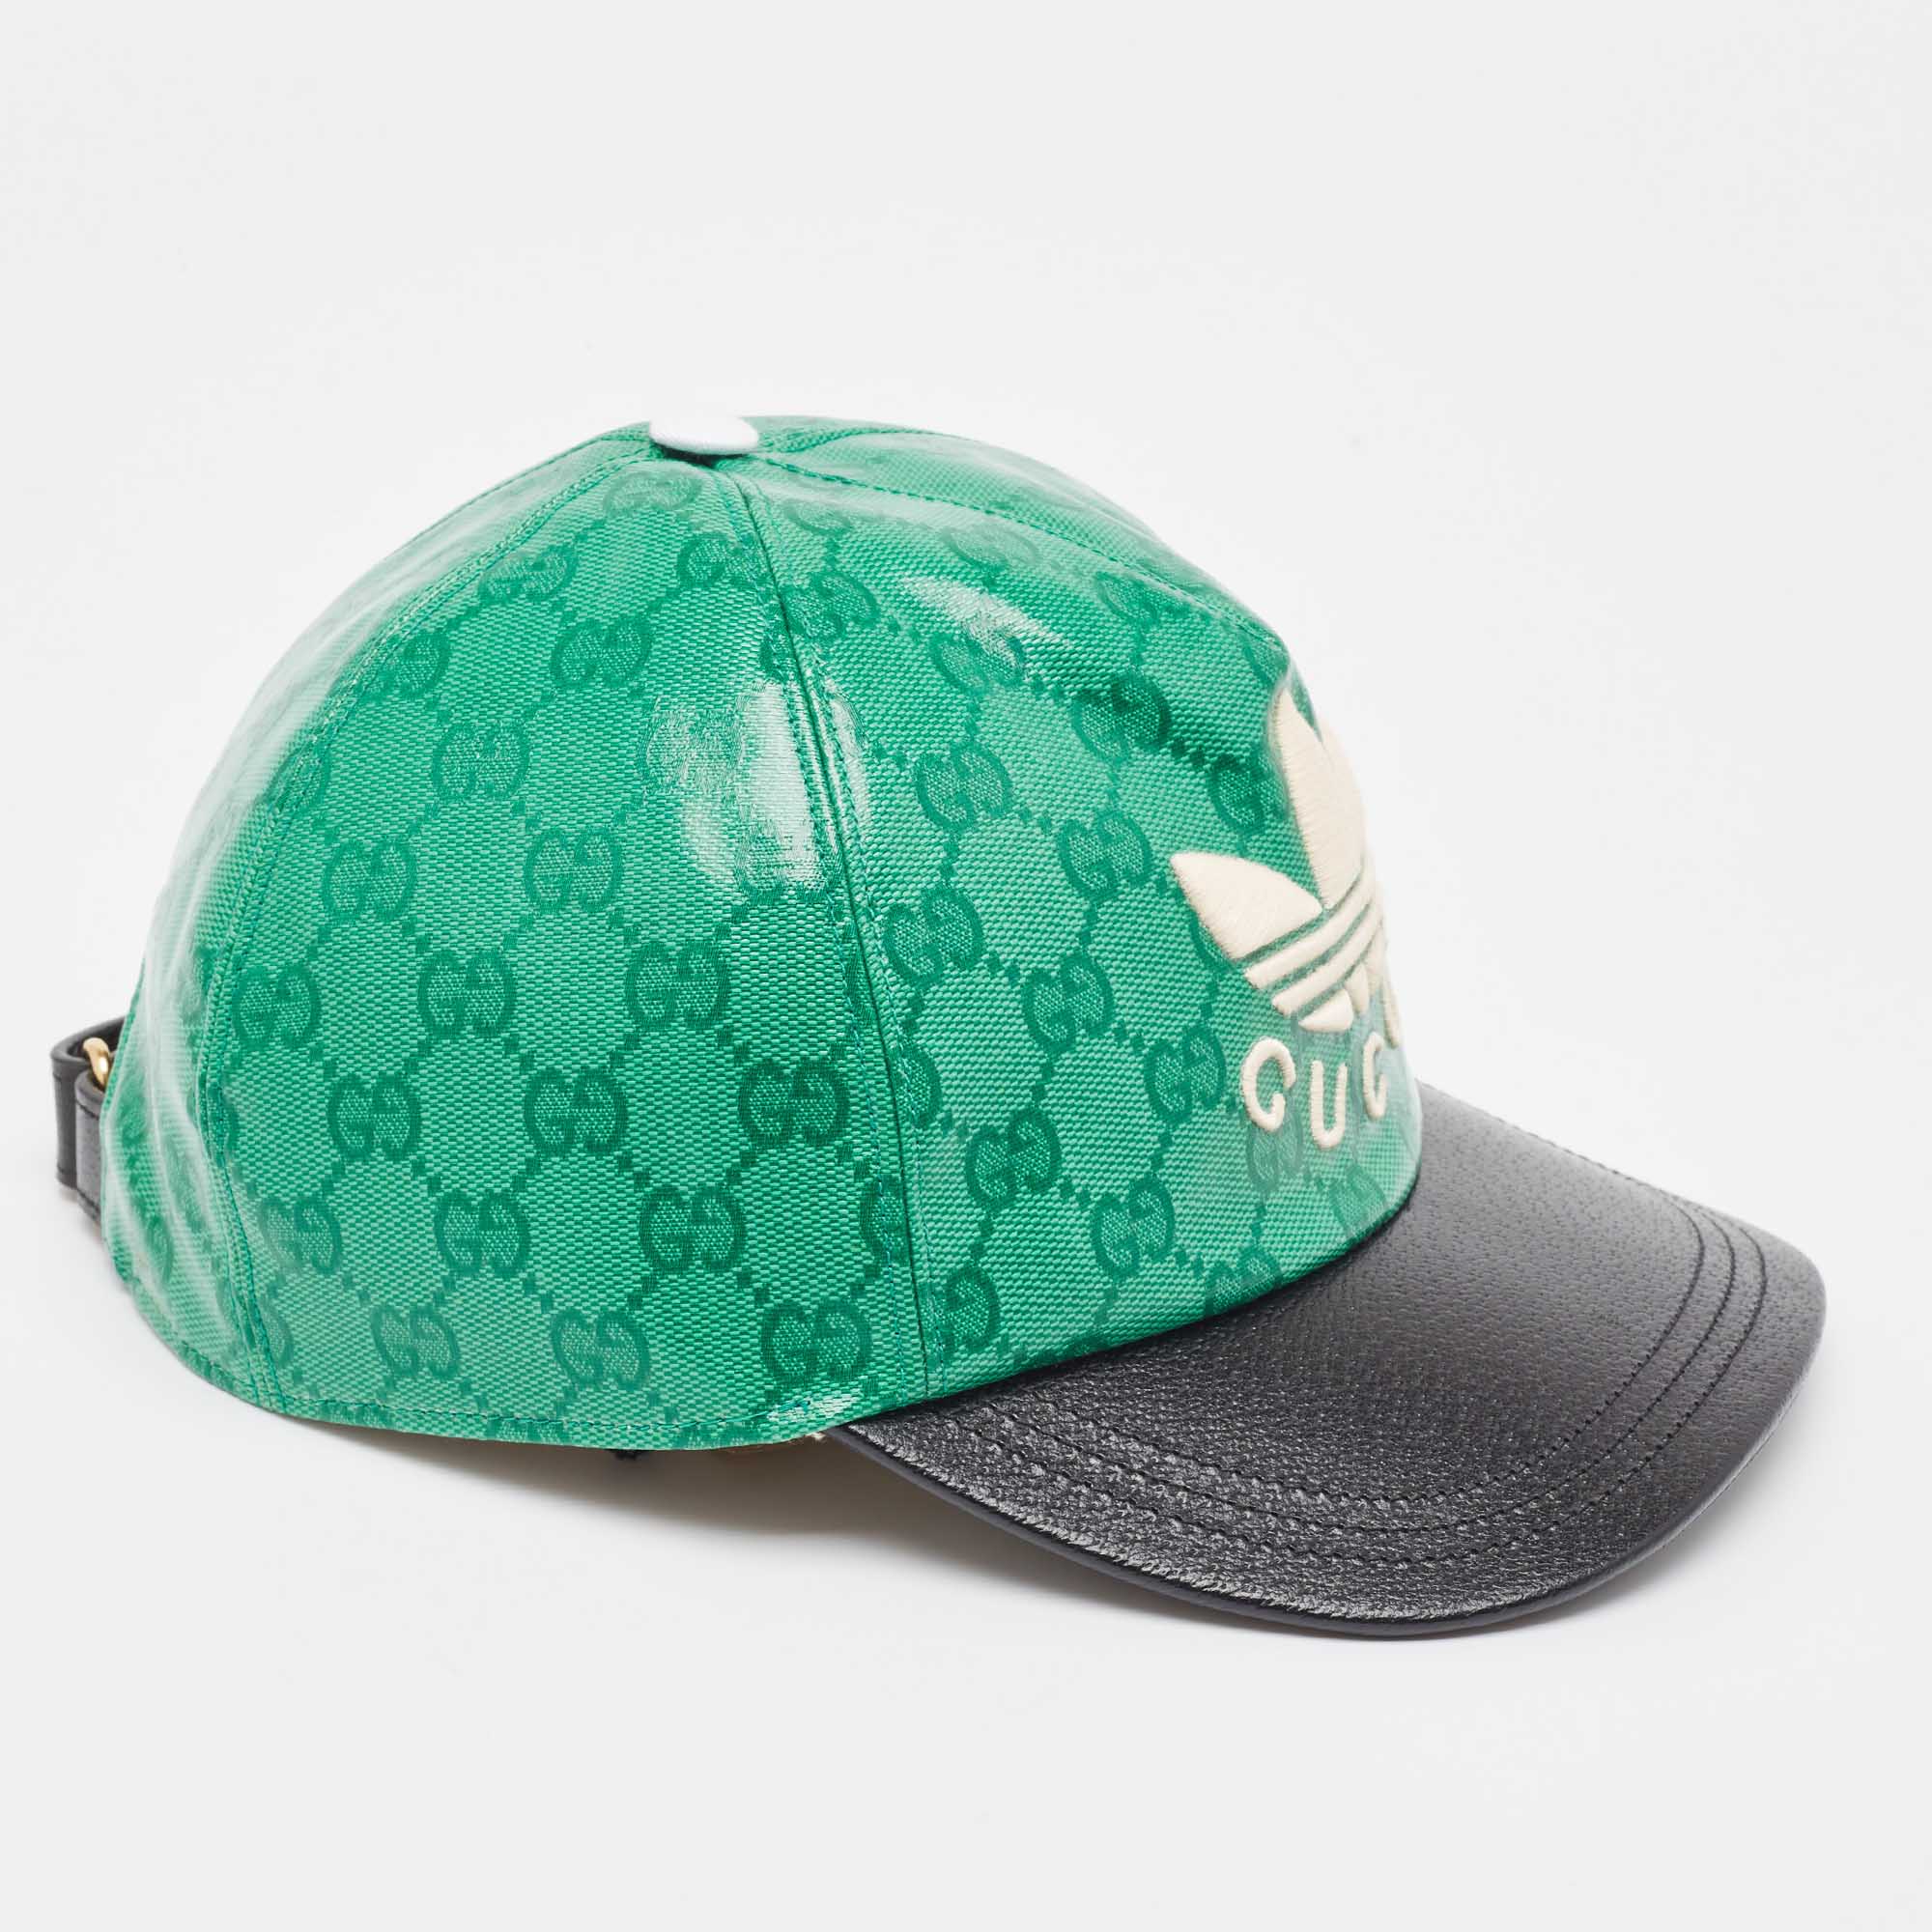 Gucci x adidas green gg supreme coated canvas baseball cap s